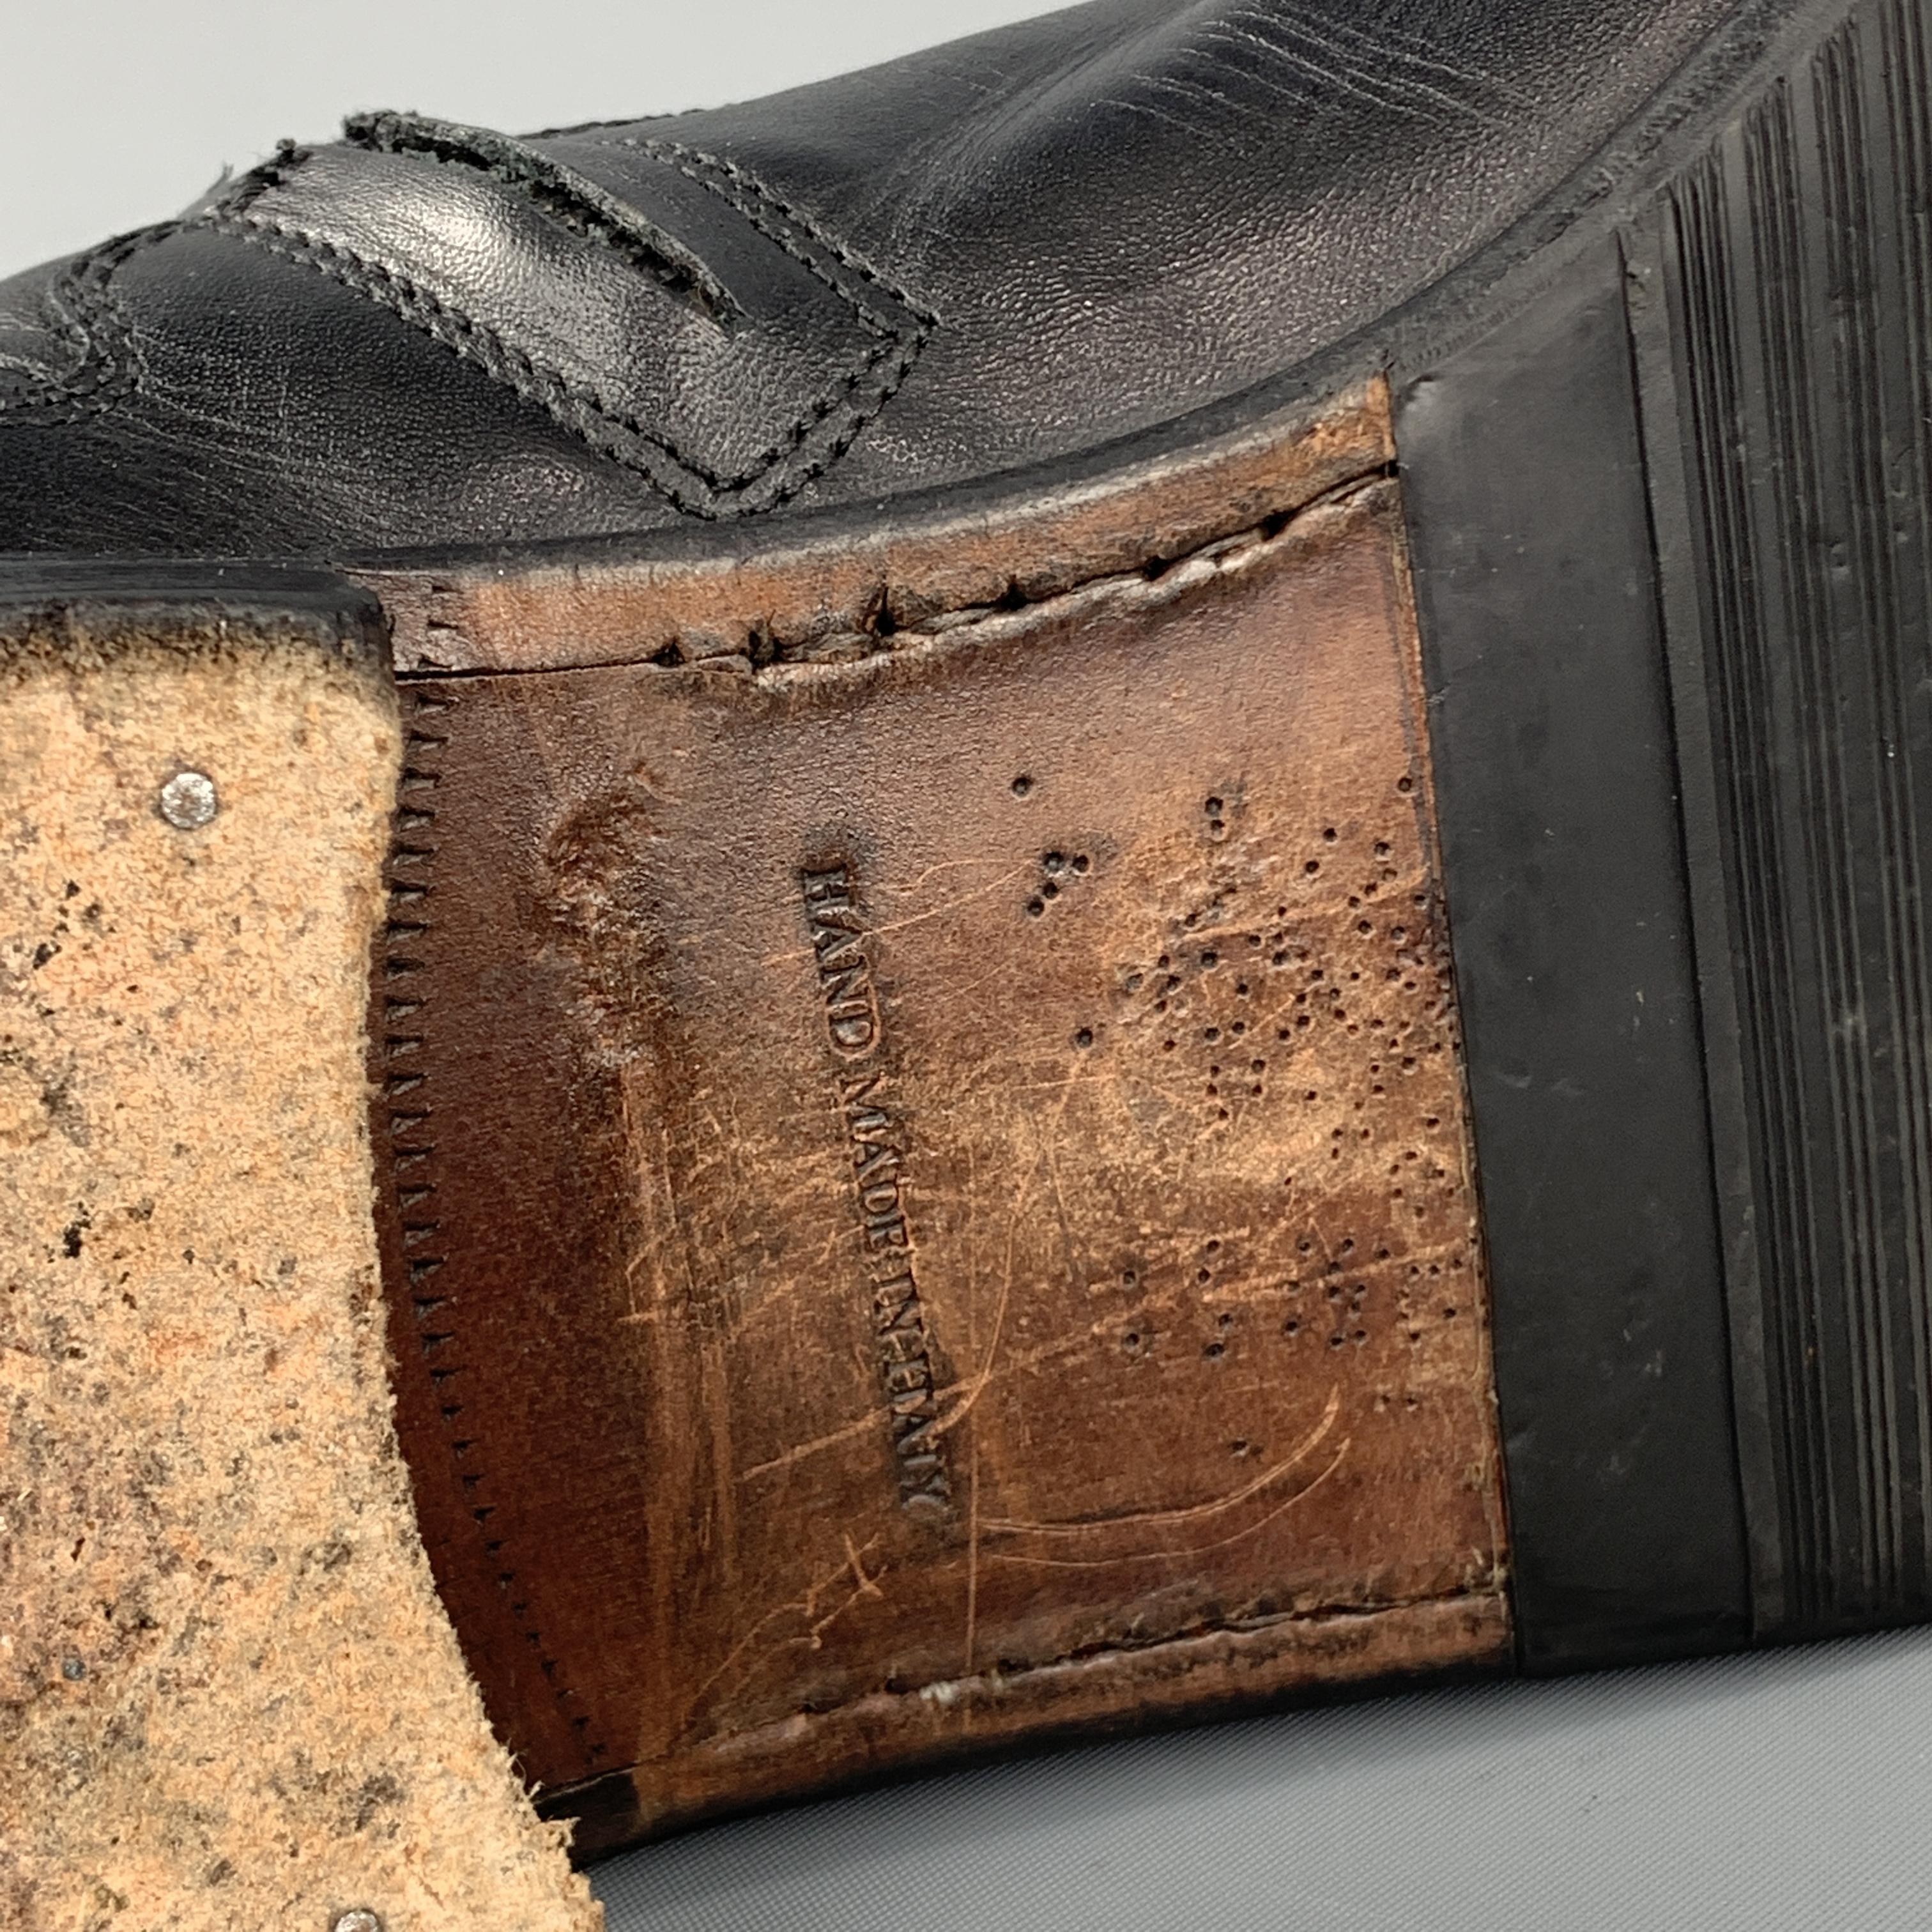 JOHN VARVATOS Size 9.5 Black Leather Side Zipper Ankle Boots 1